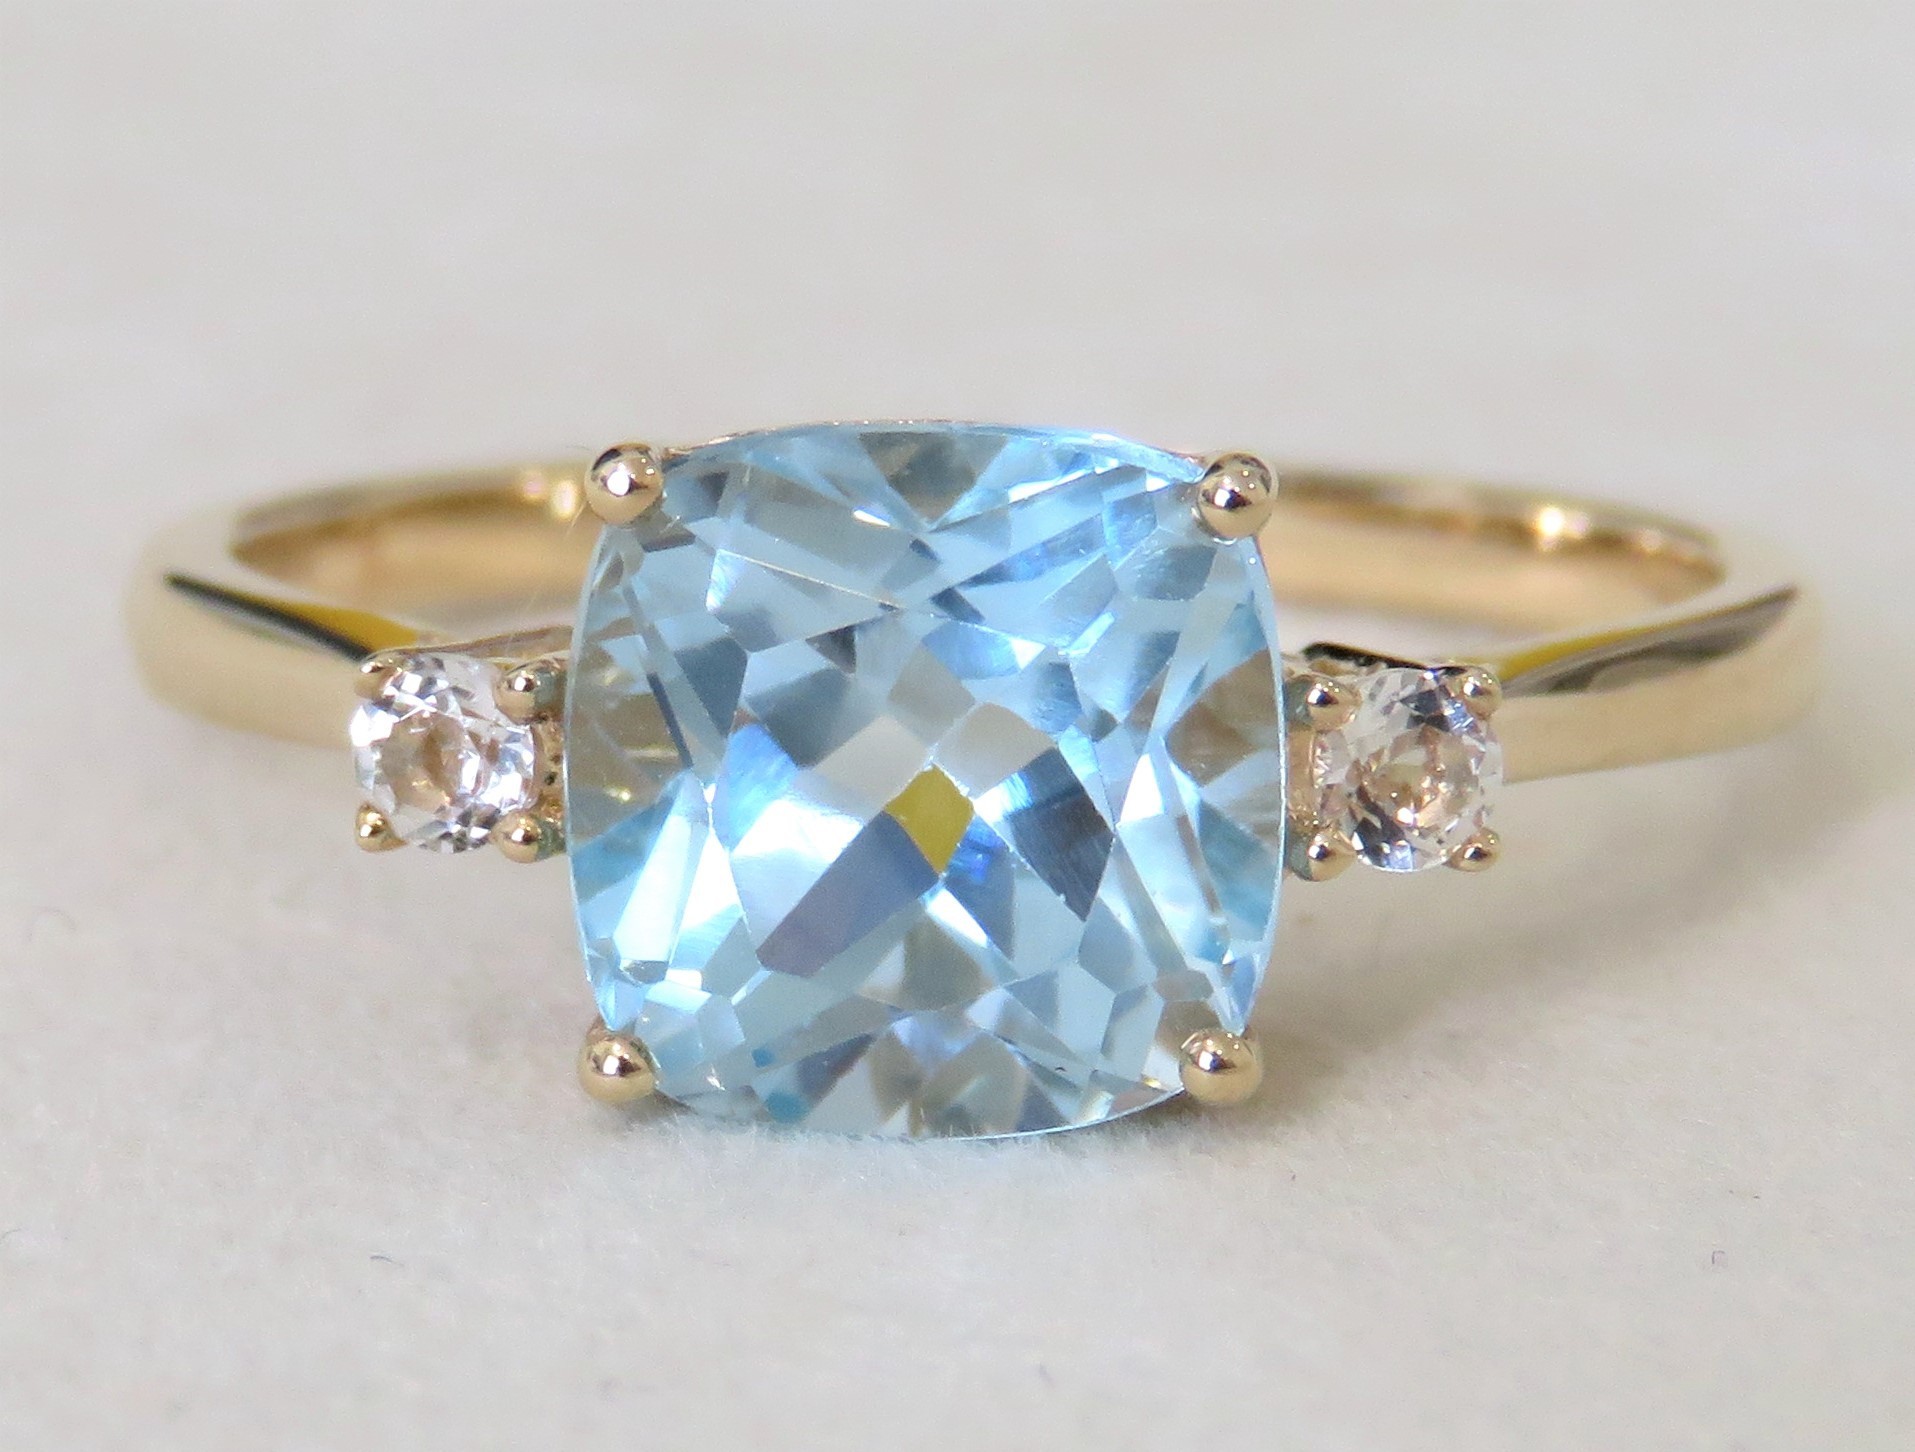 9k Yellow Gold 2.7ct Blue Topaz & White Sapphire Ring